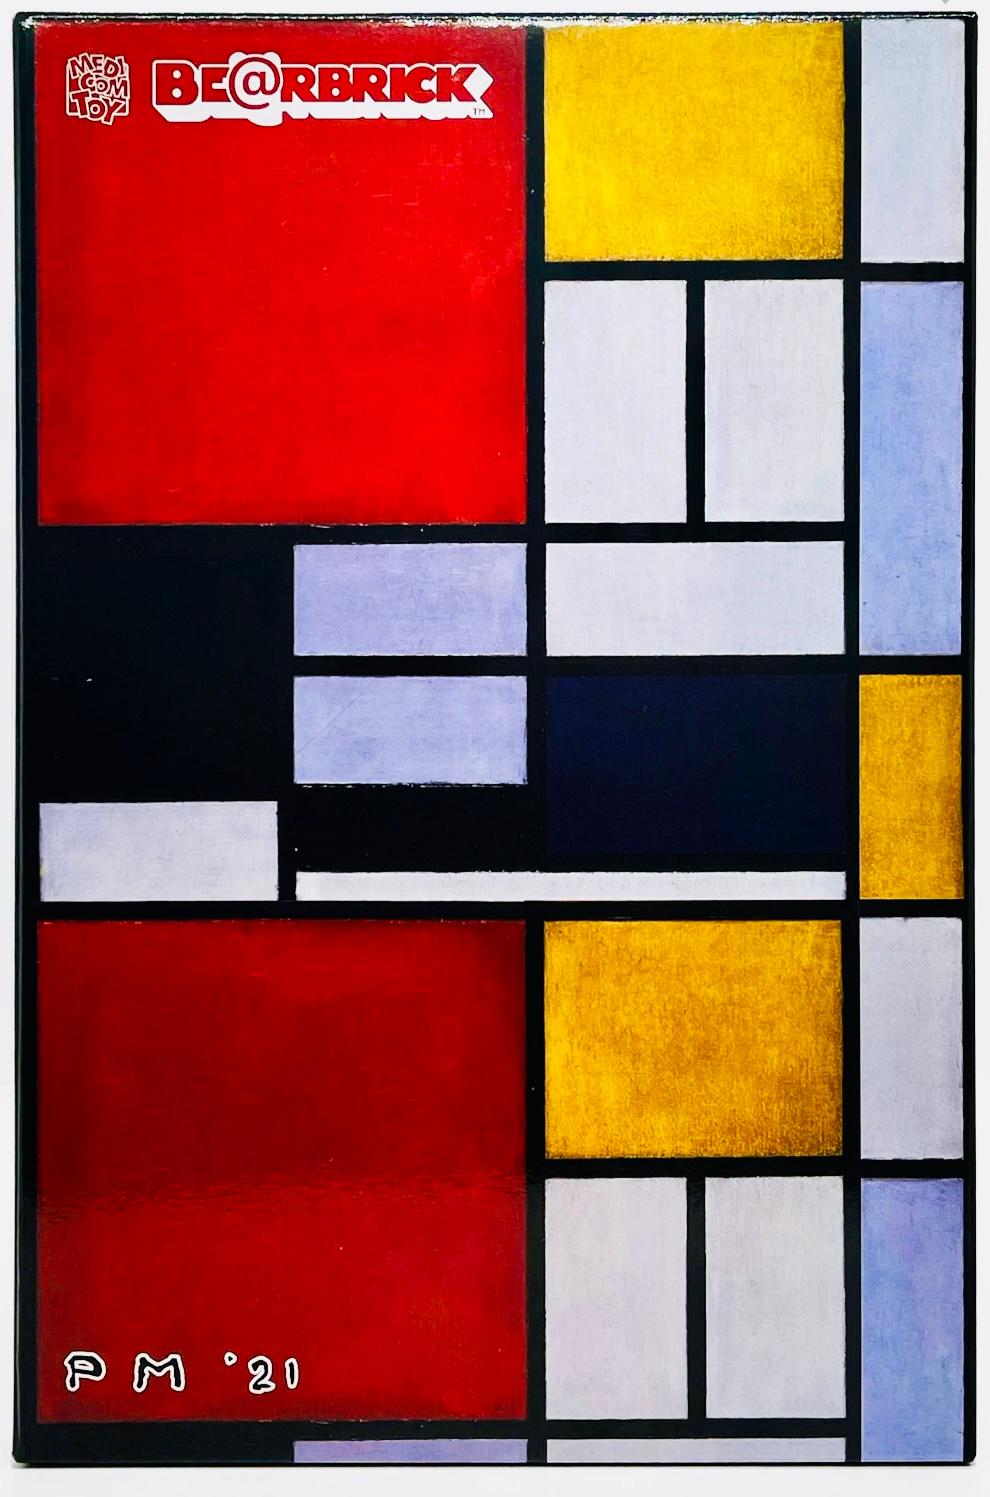 Piet Mondrian Bearbrick 400% (Mondrian BE@RBRICK) 1